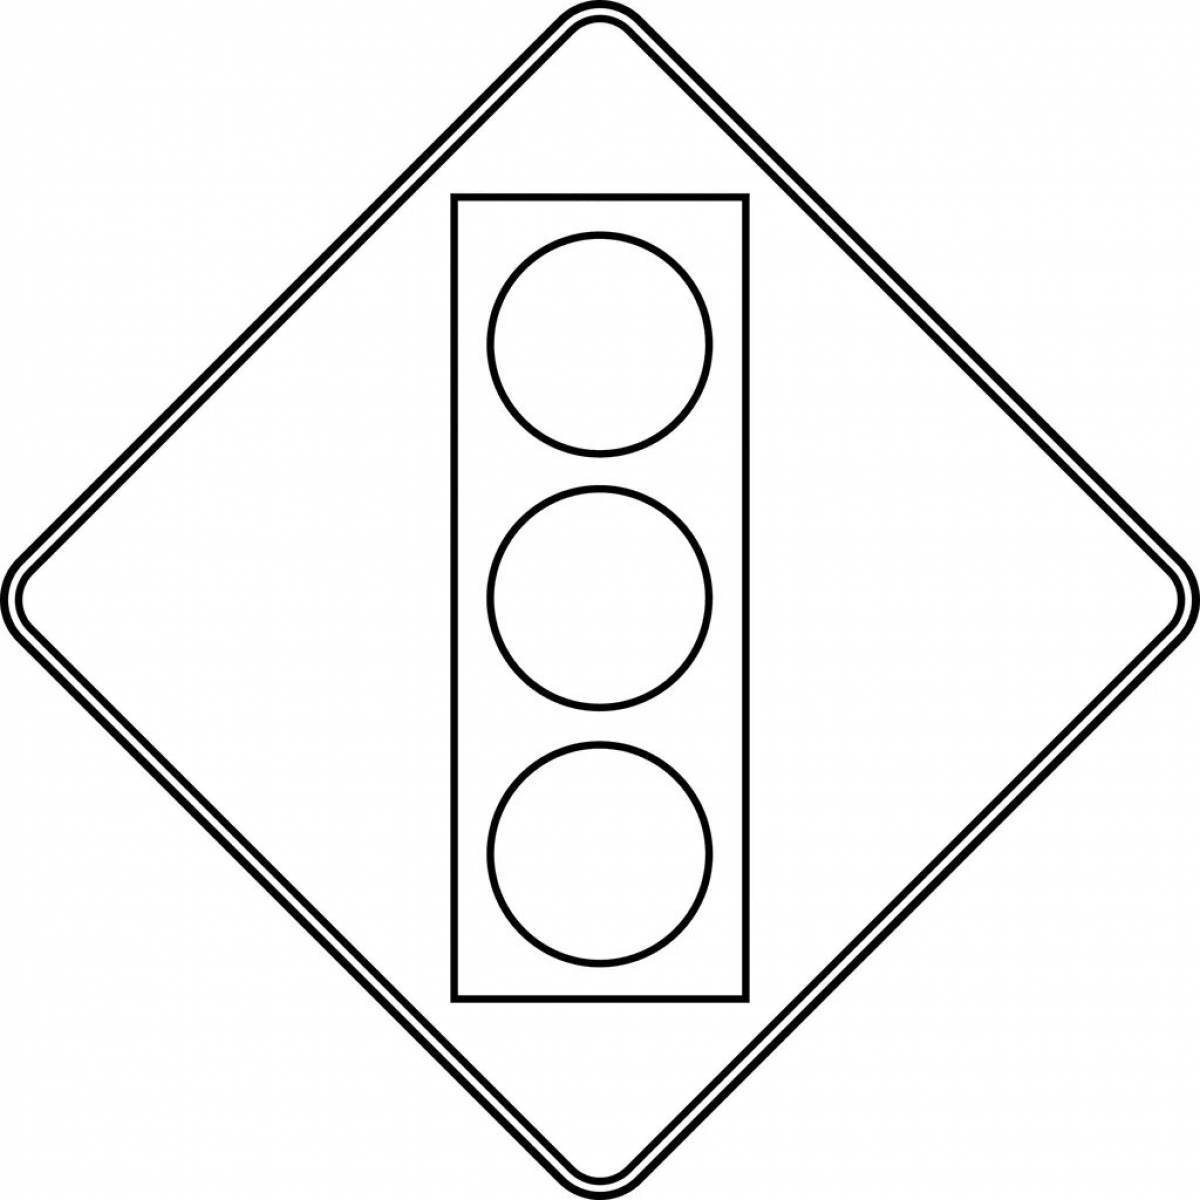 Sign traffic light #12